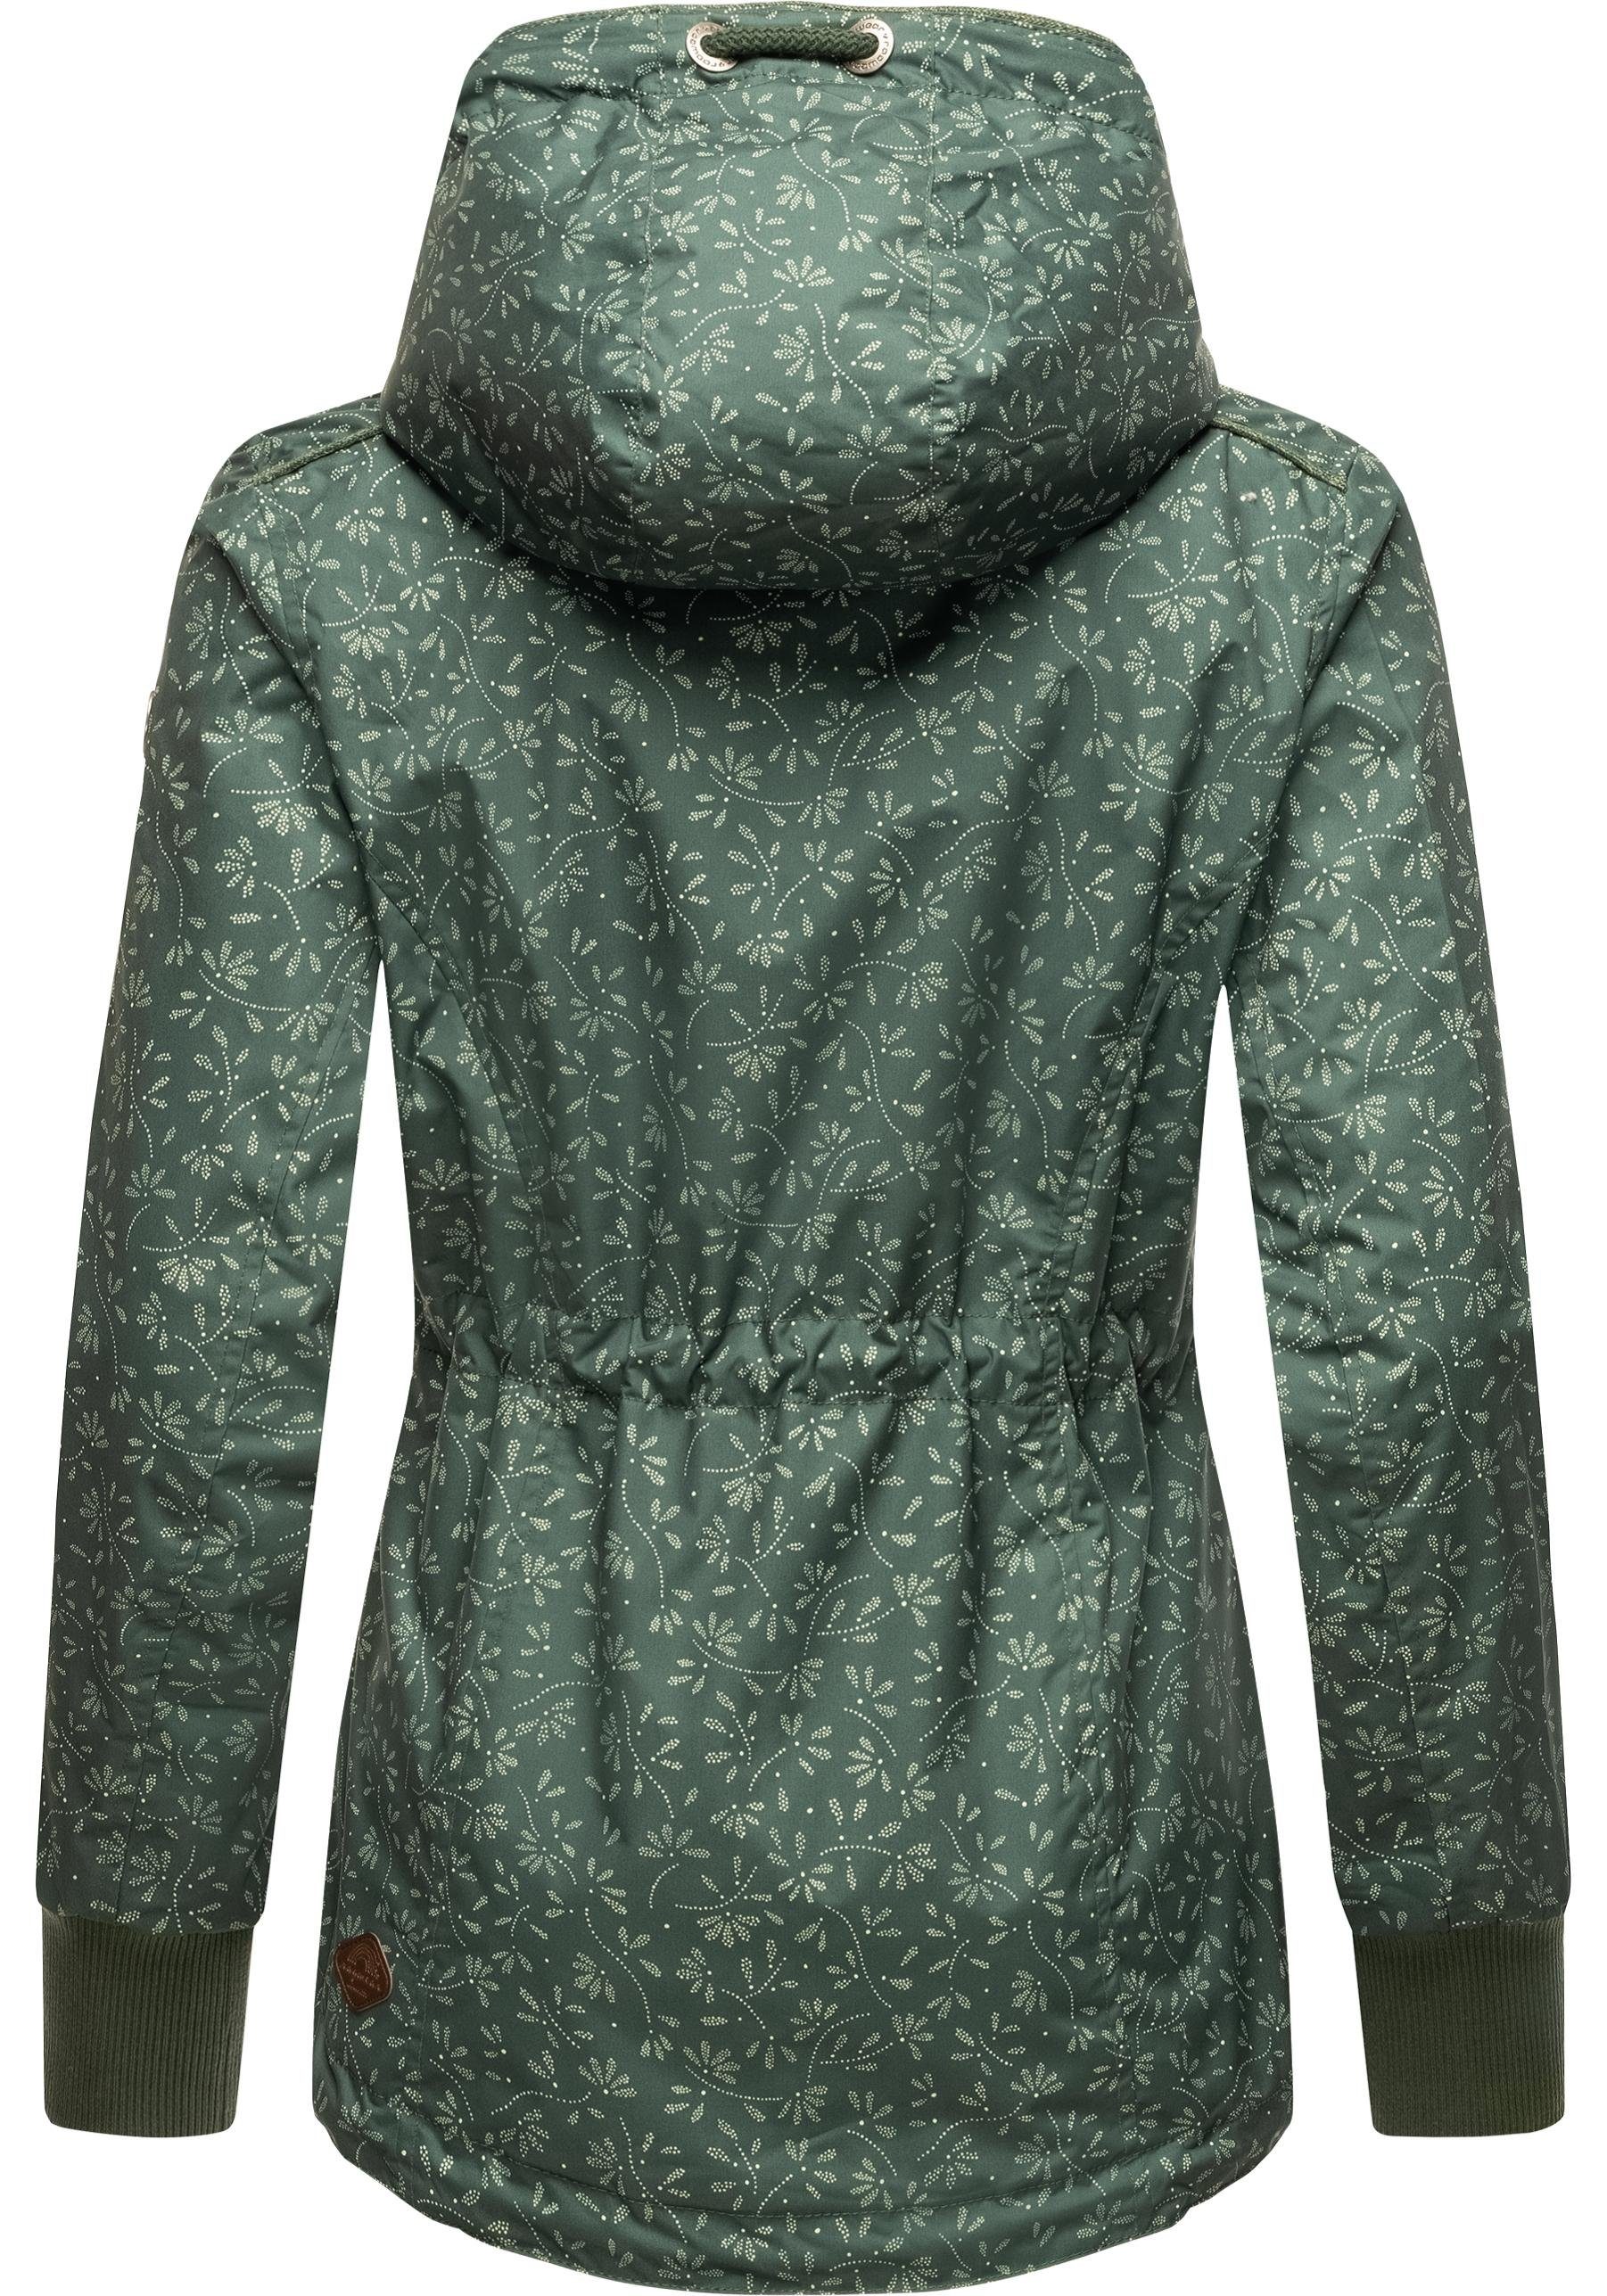 Danka und stylische dunkelgrün Bloom Outdoorjacke Kapuze Übergangsjacke Ragwear Print mit